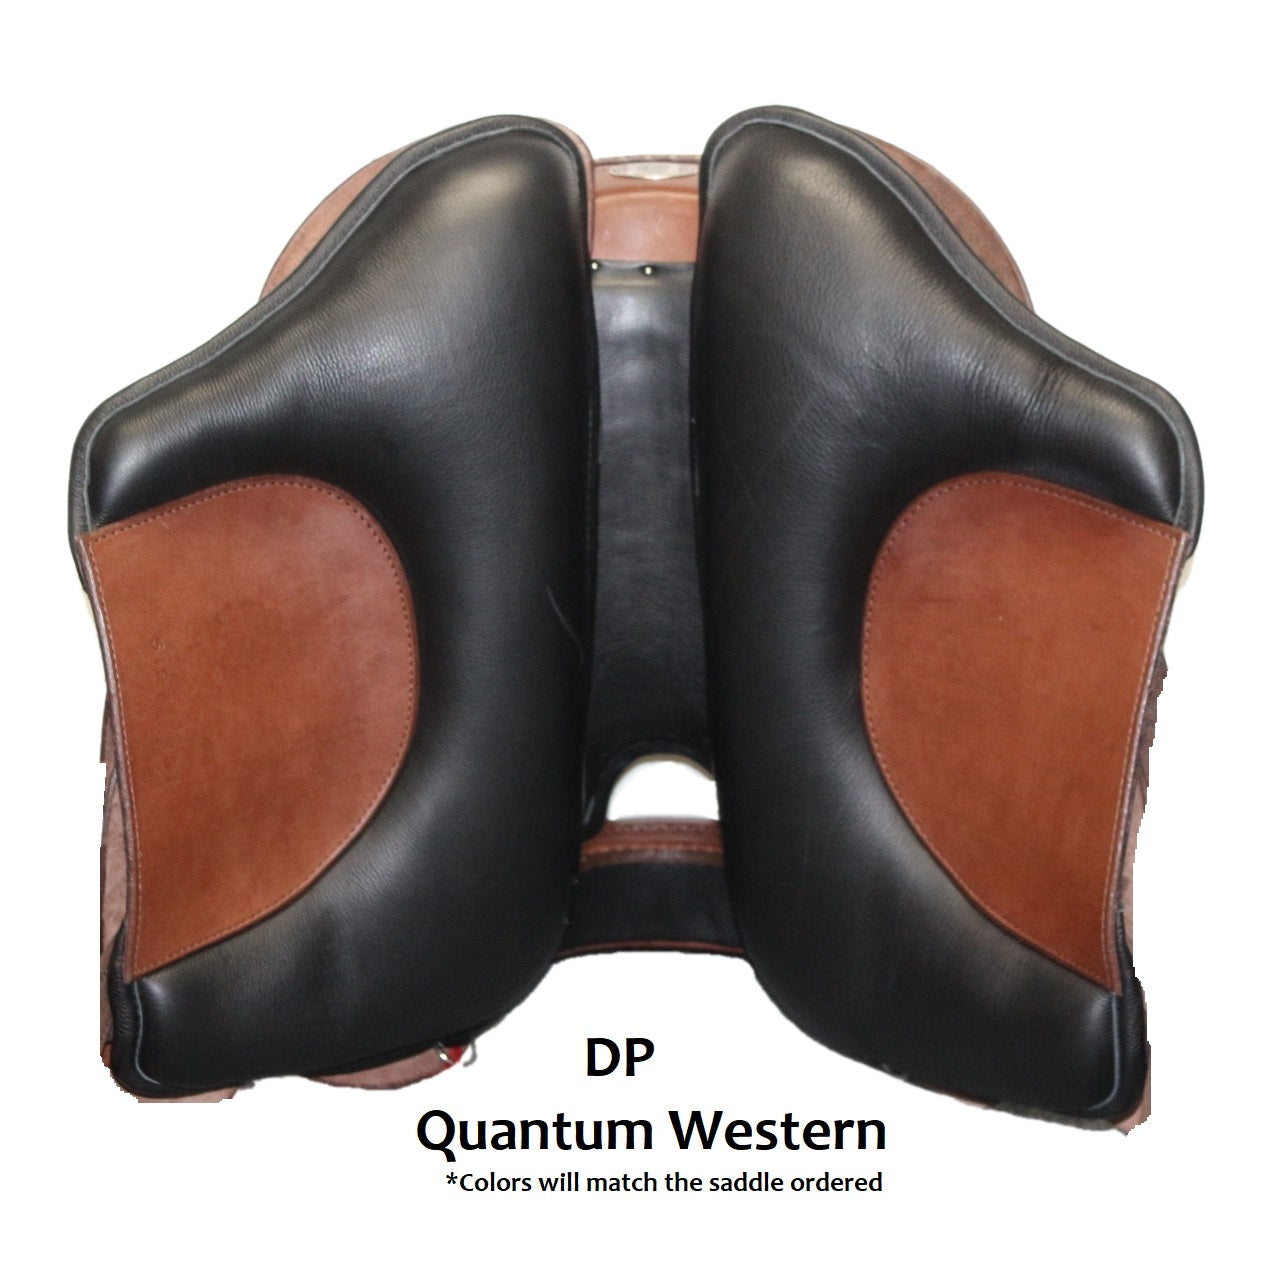 DP Saddlery Quantum Western WD 7496 S2